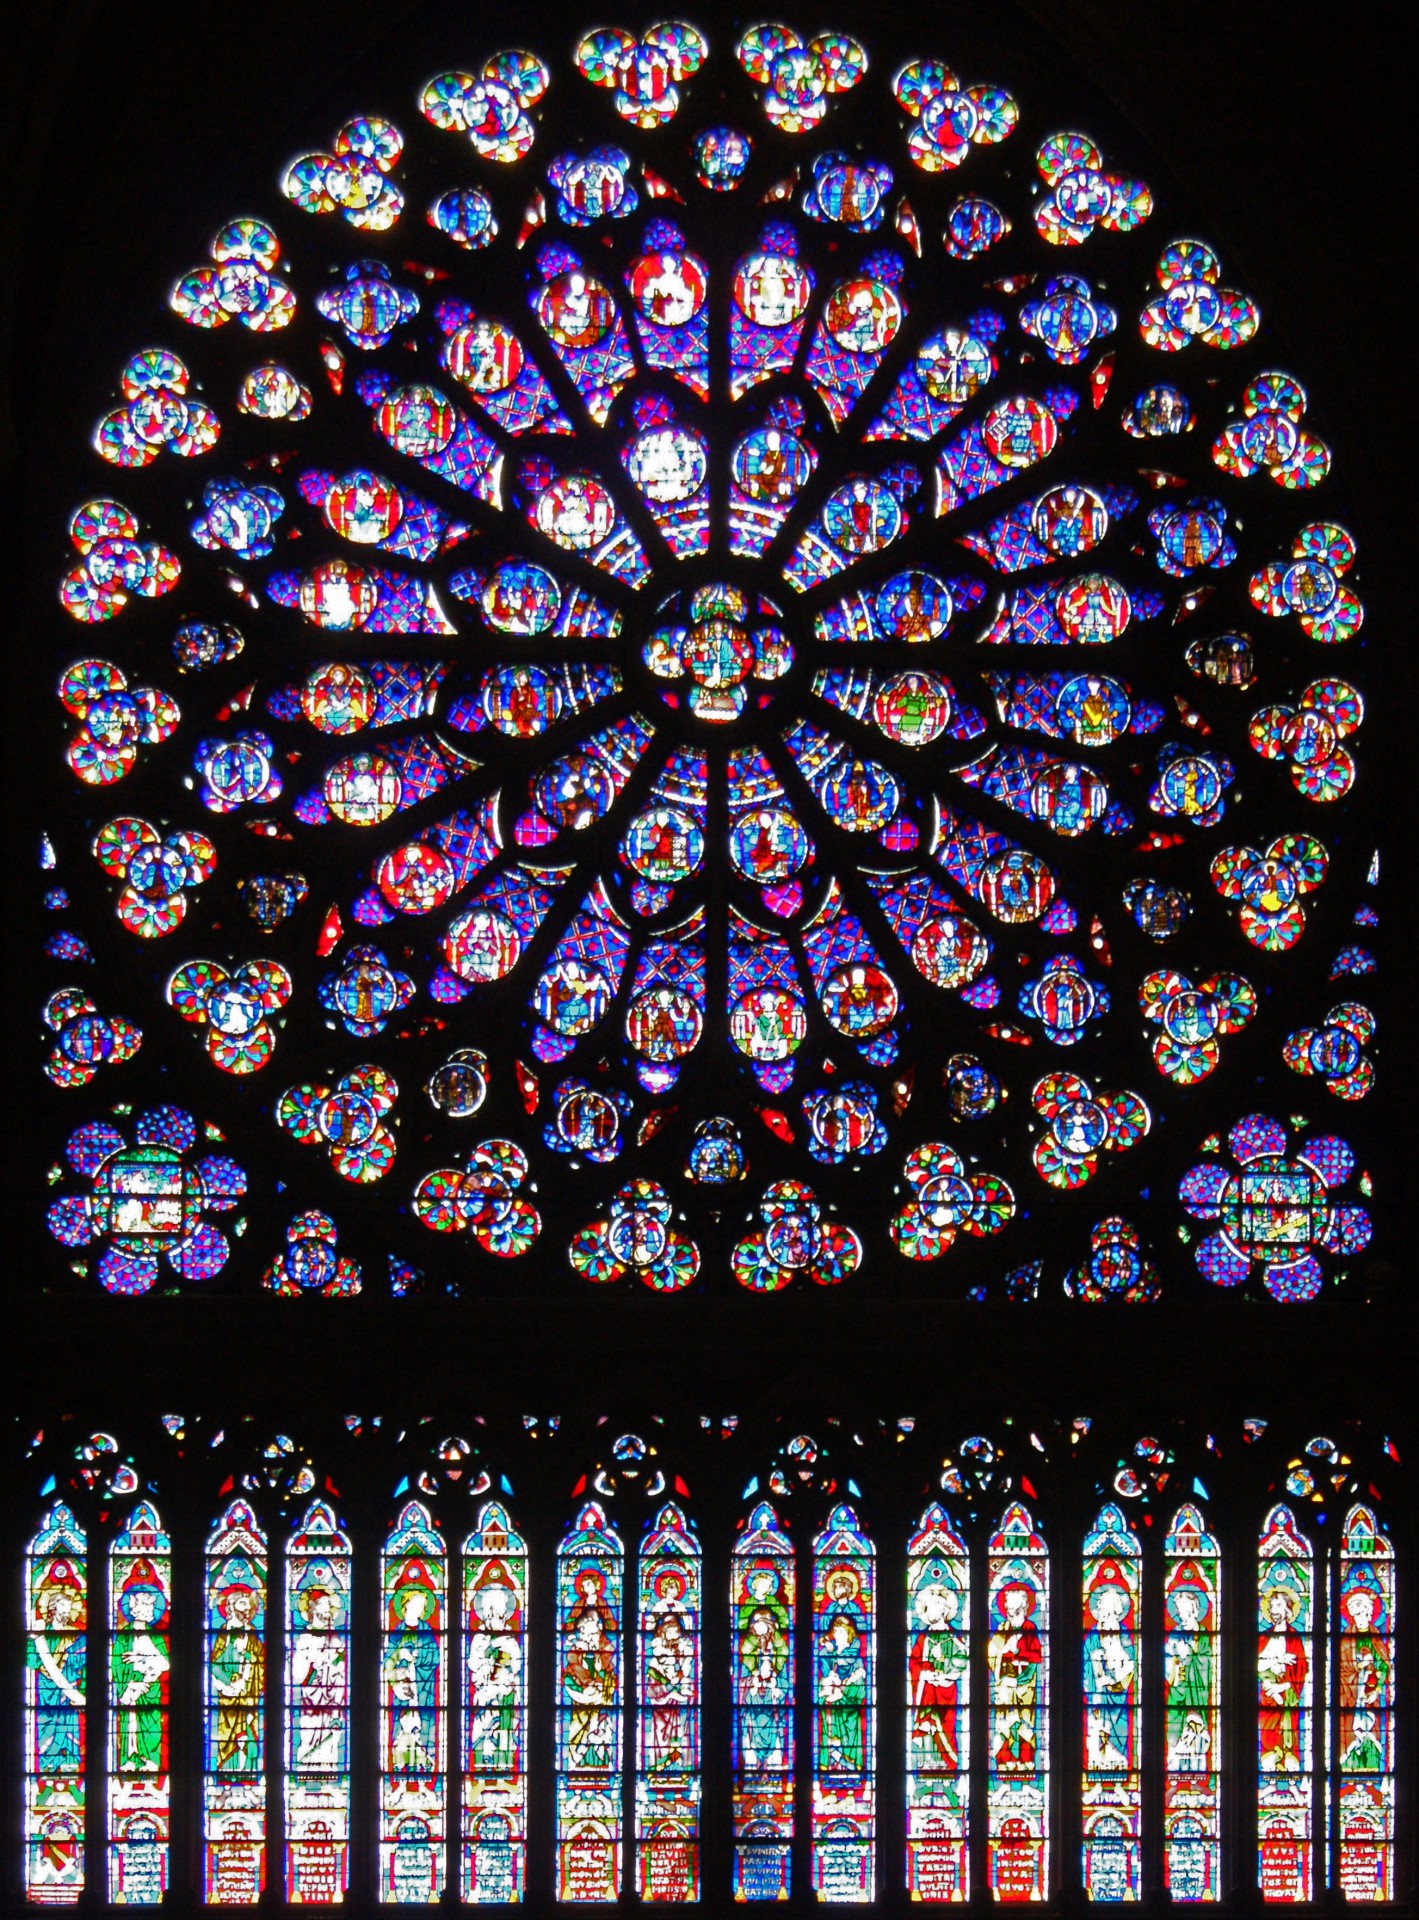 Rose Window Notre Dame Cathedral, Paris